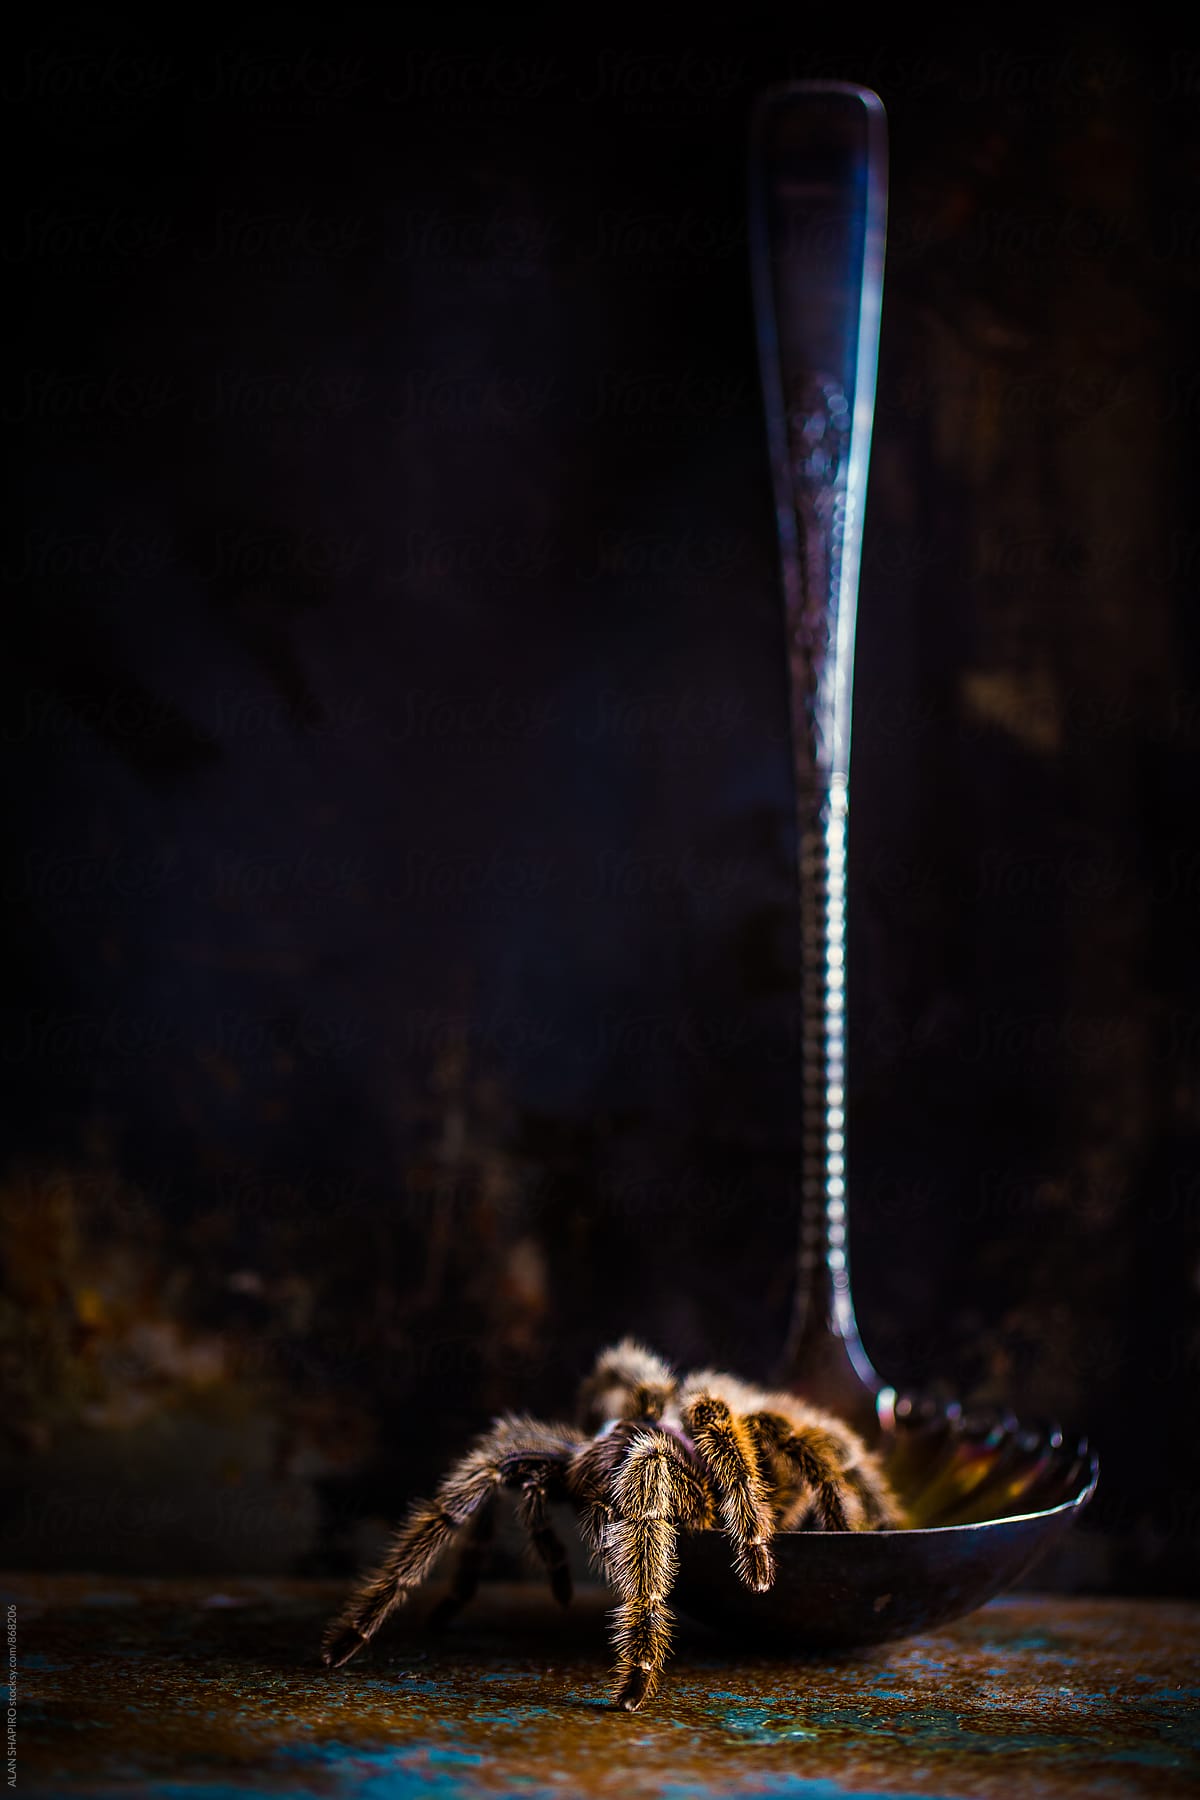 still life with tarantula and a ladle